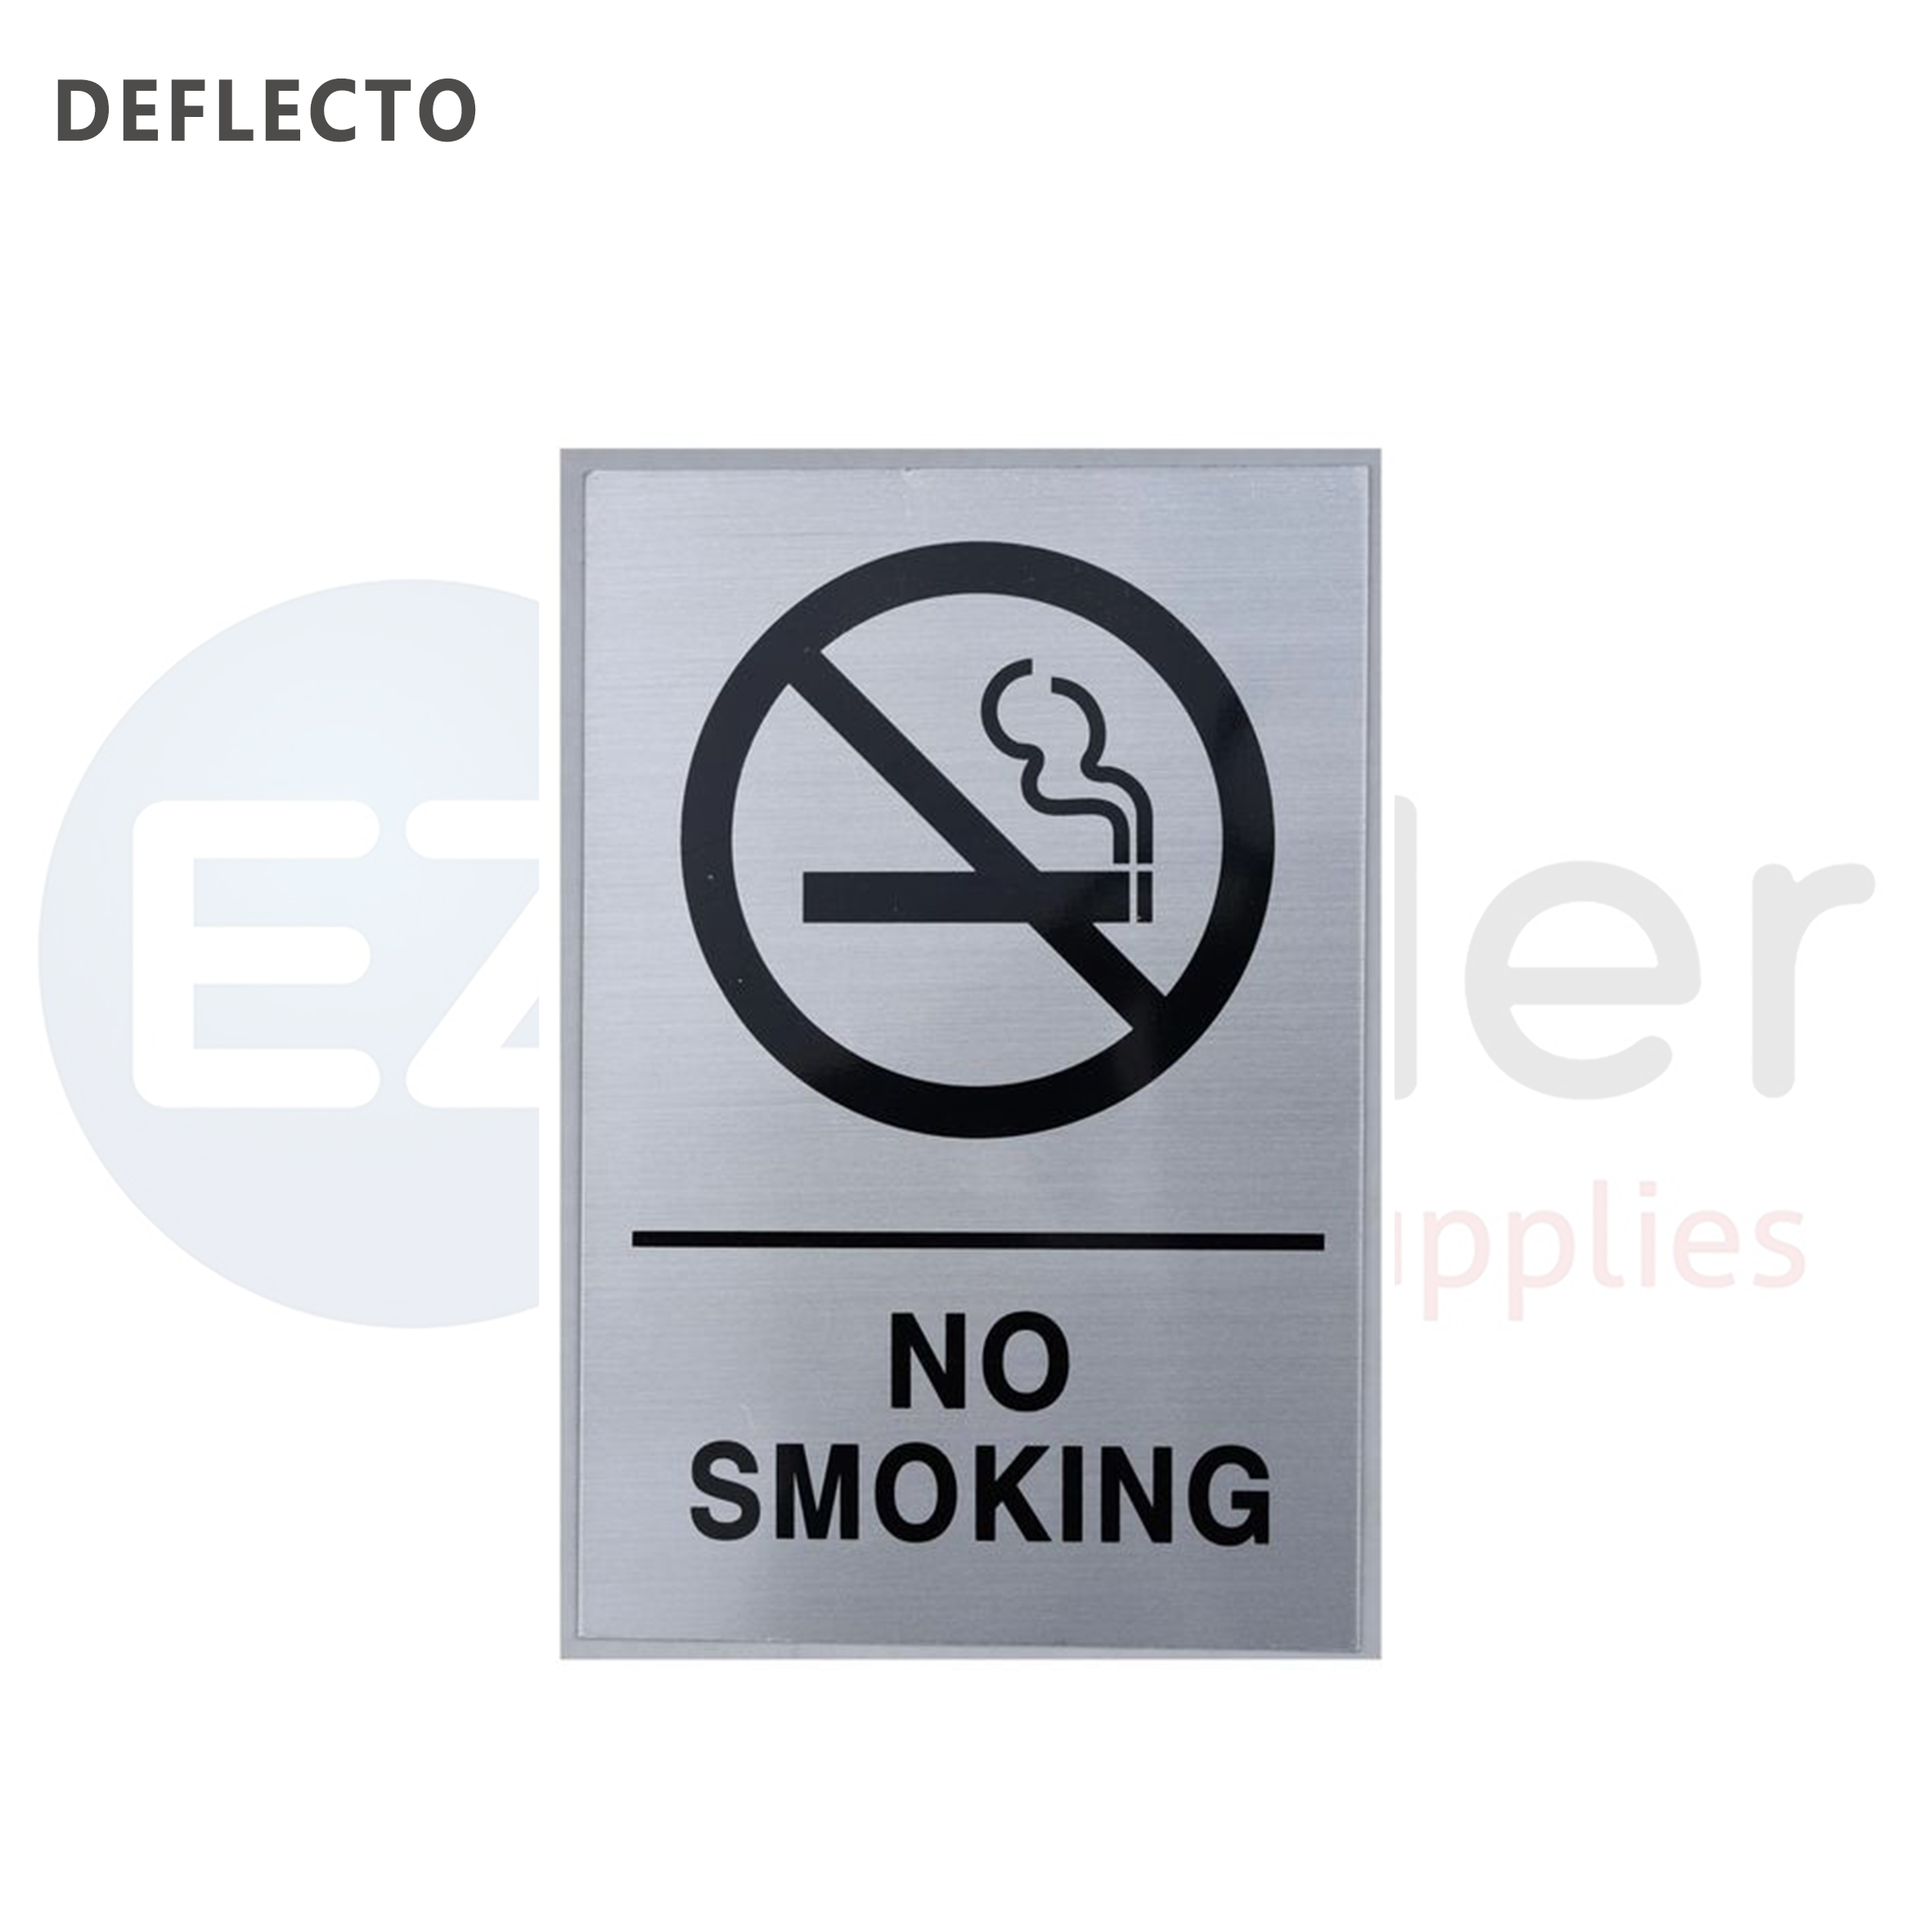 DEFLECTO sign NO SMOKING aluminium plastic material